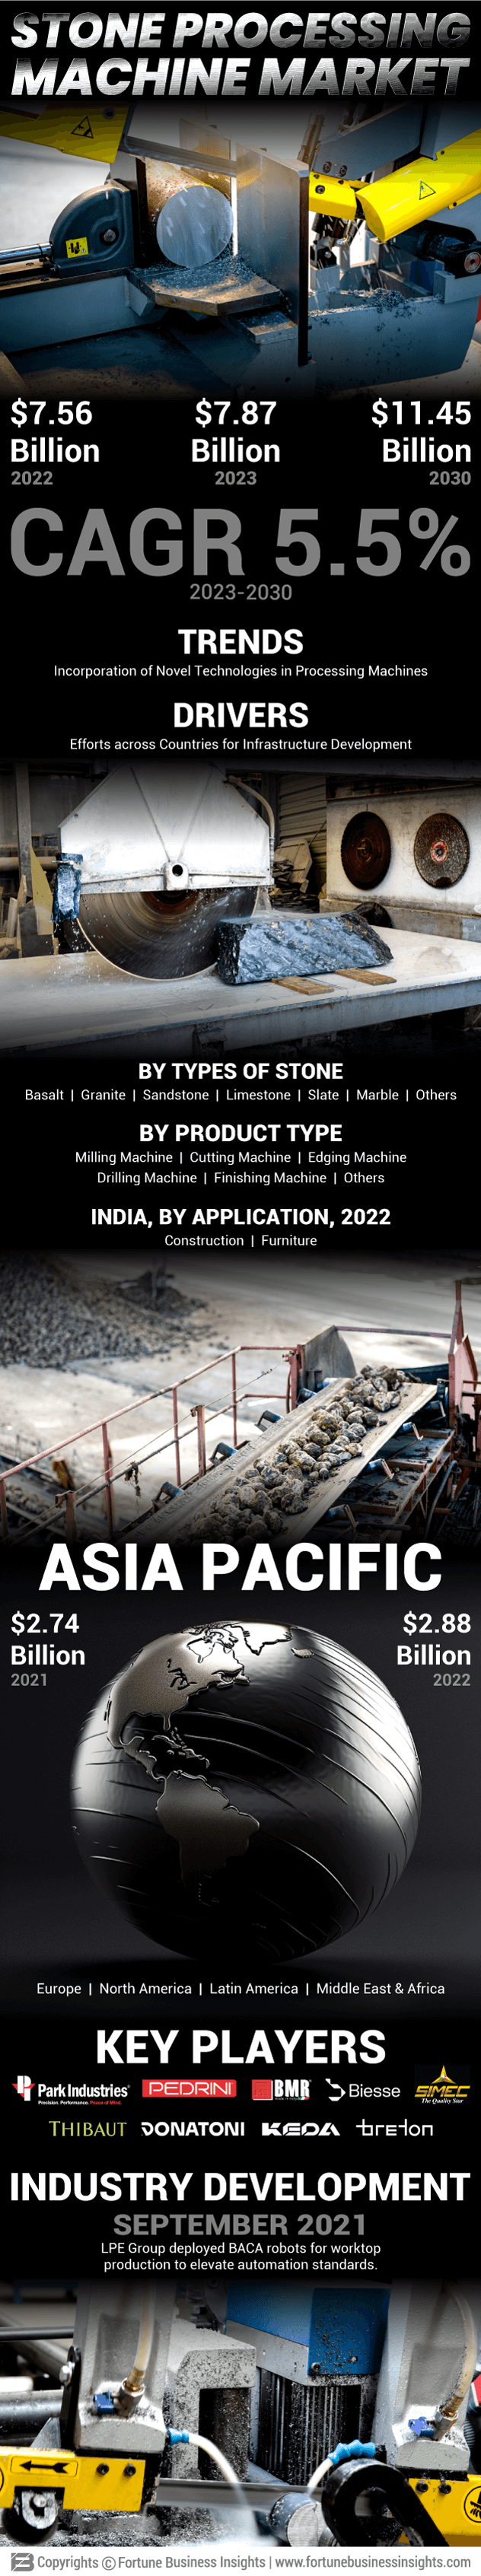 Stone Processing Machine Market